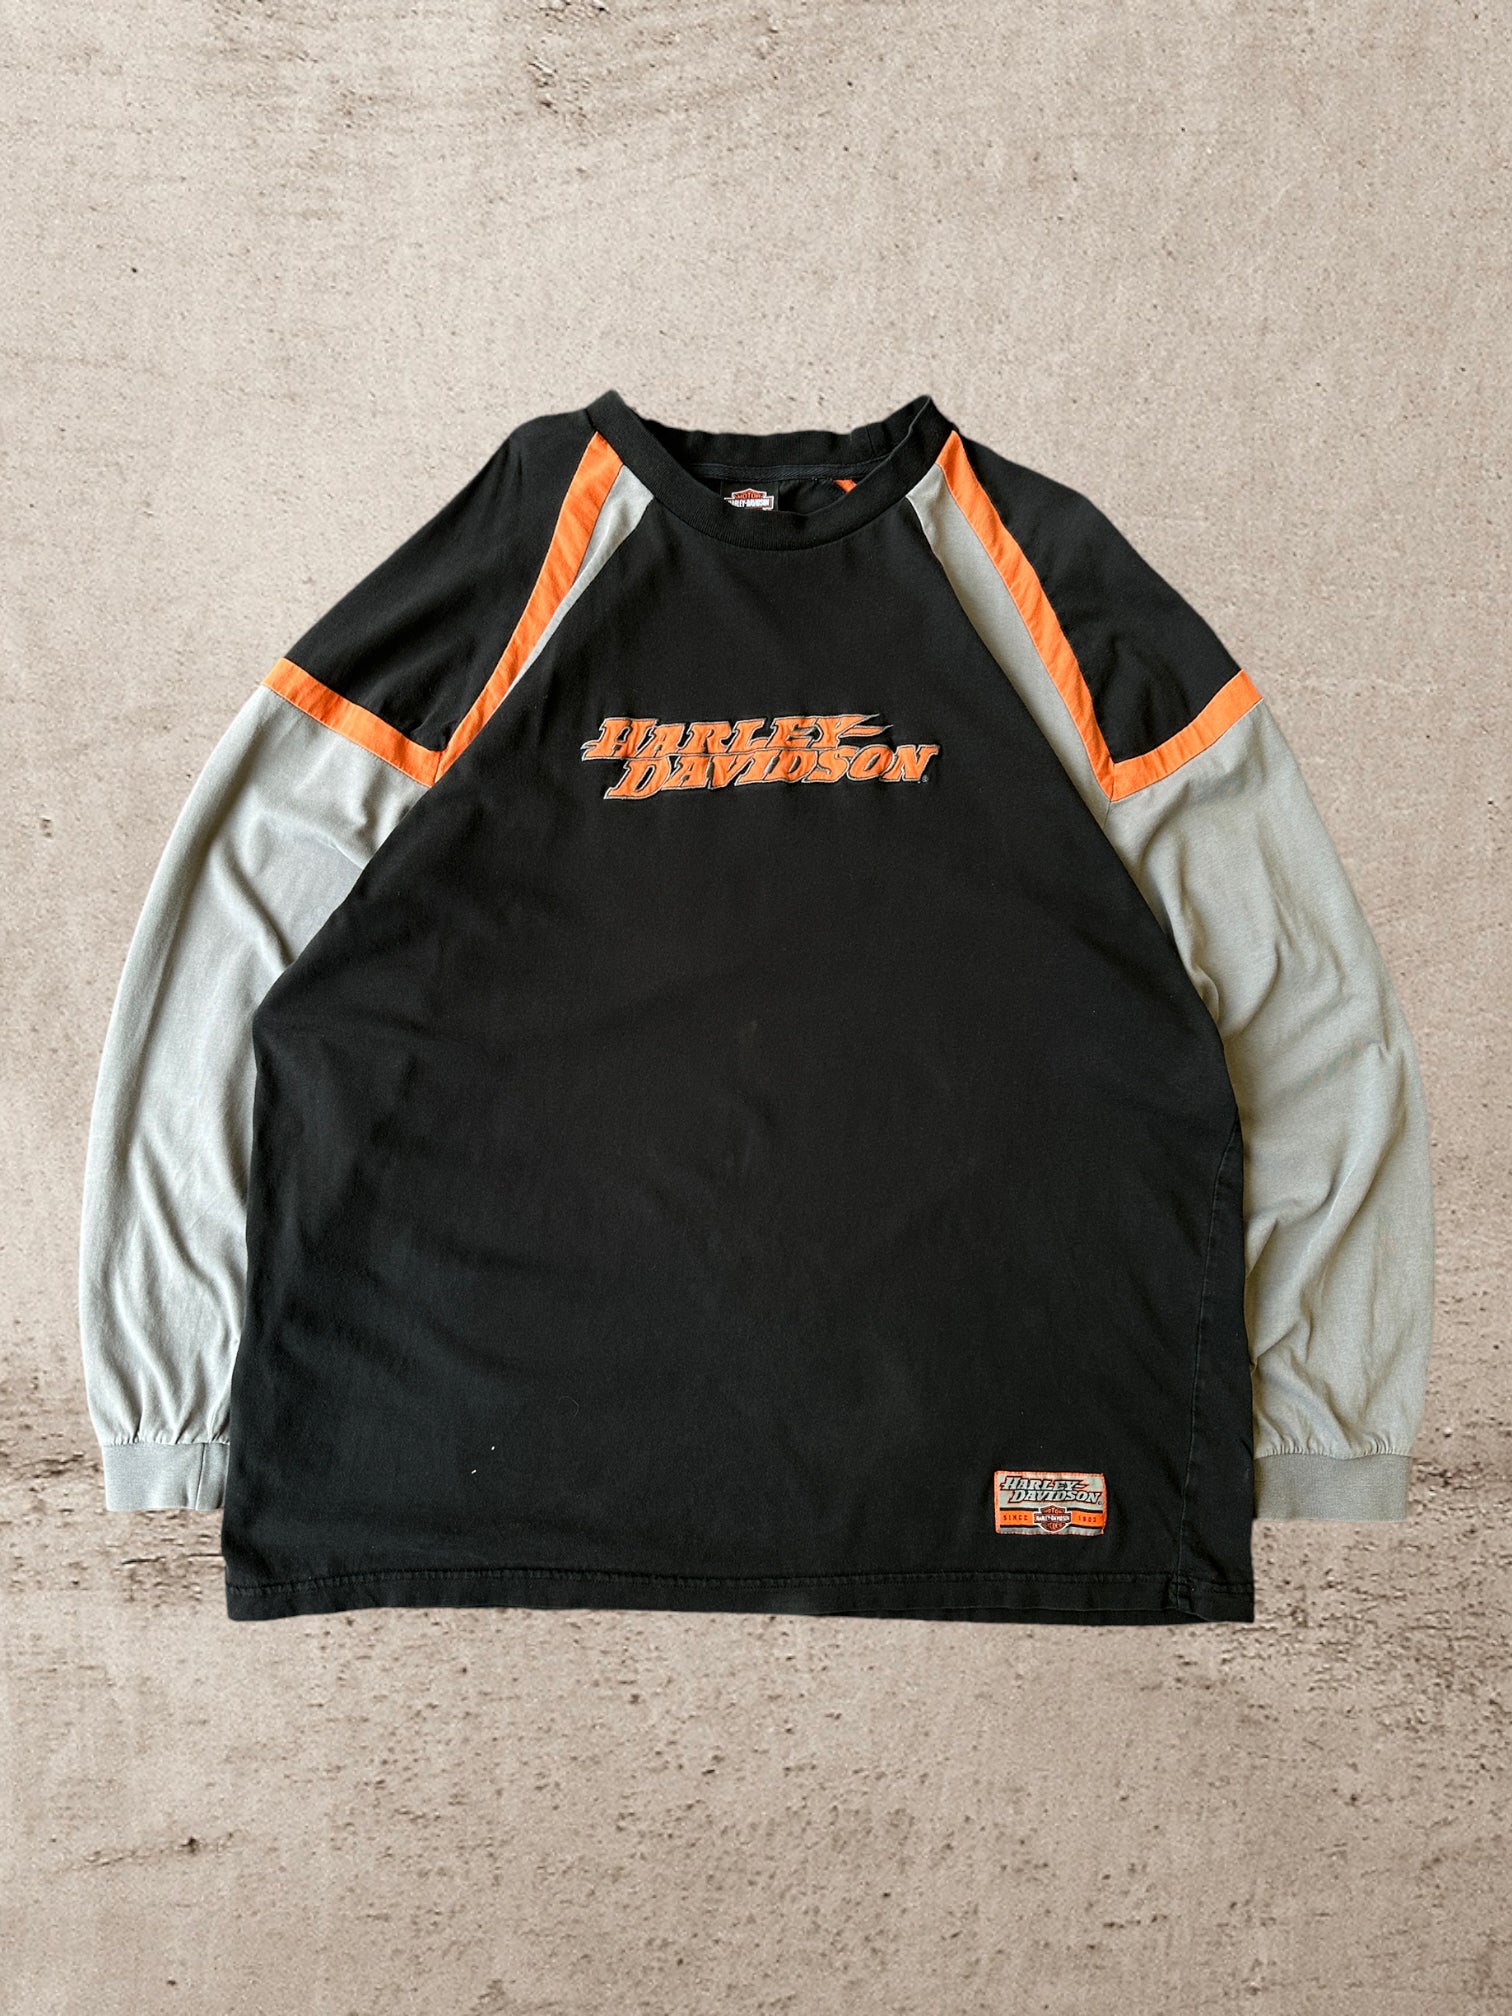 Vintage Harley Davidson Long Sleeve T-Shirt - XXL